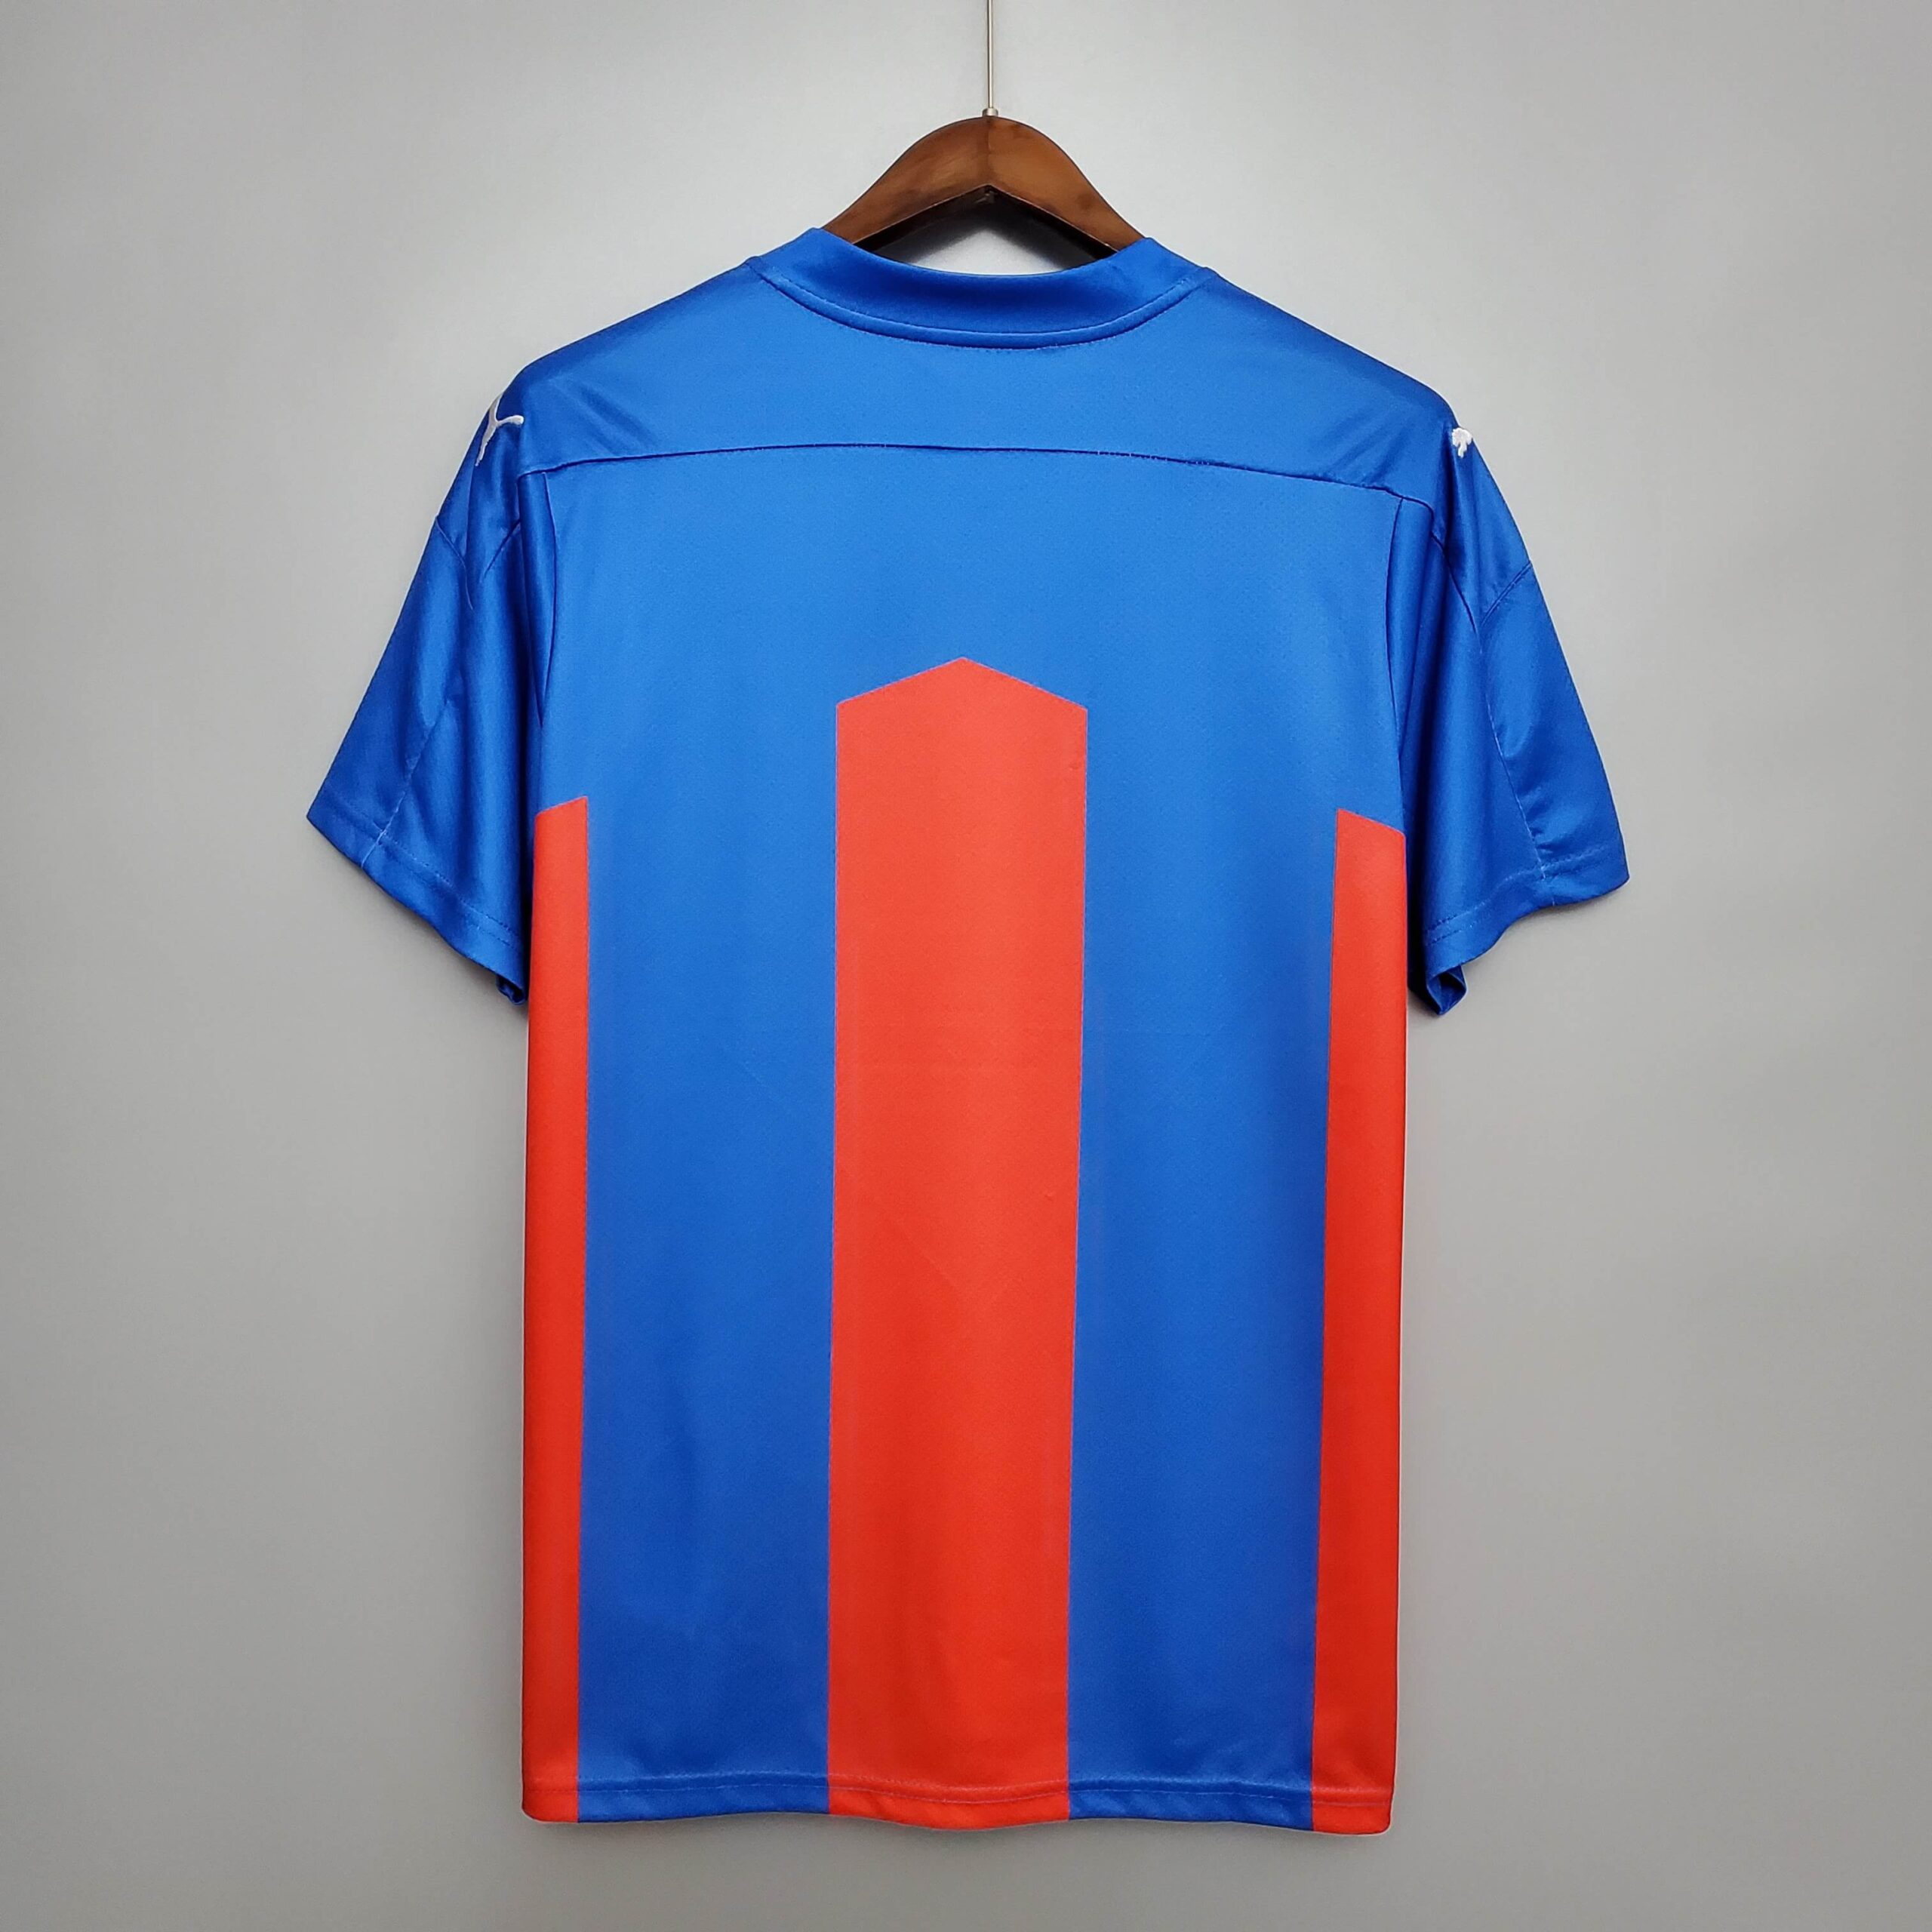 The Newkits | Buy Crystal Palace 20/21 Home Kit | Football ...